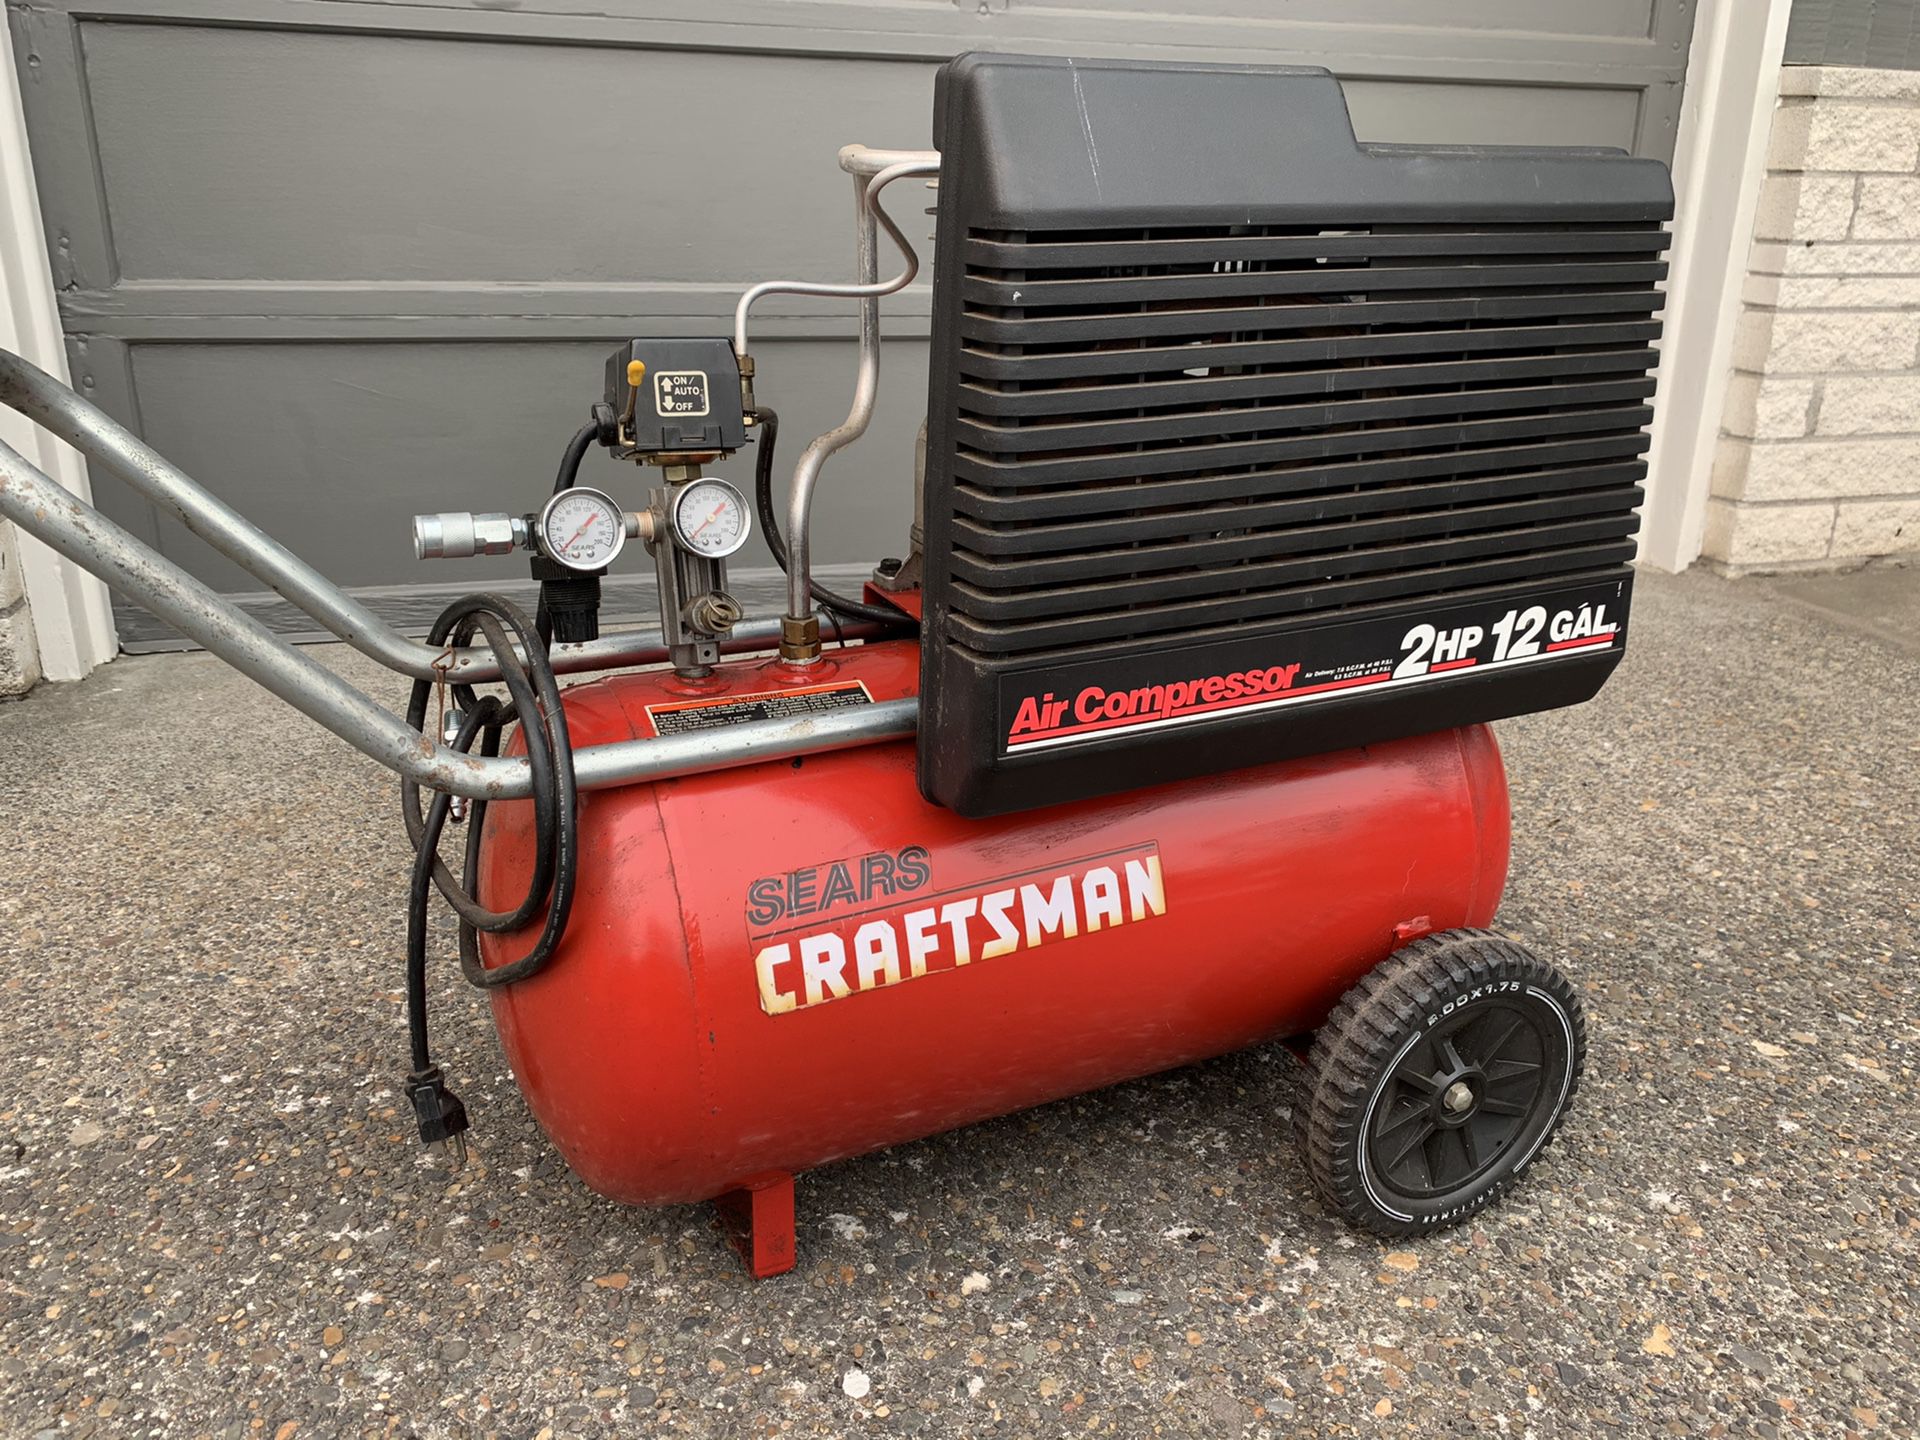 Sears Craftsman 2hp 12gal Air Compressor